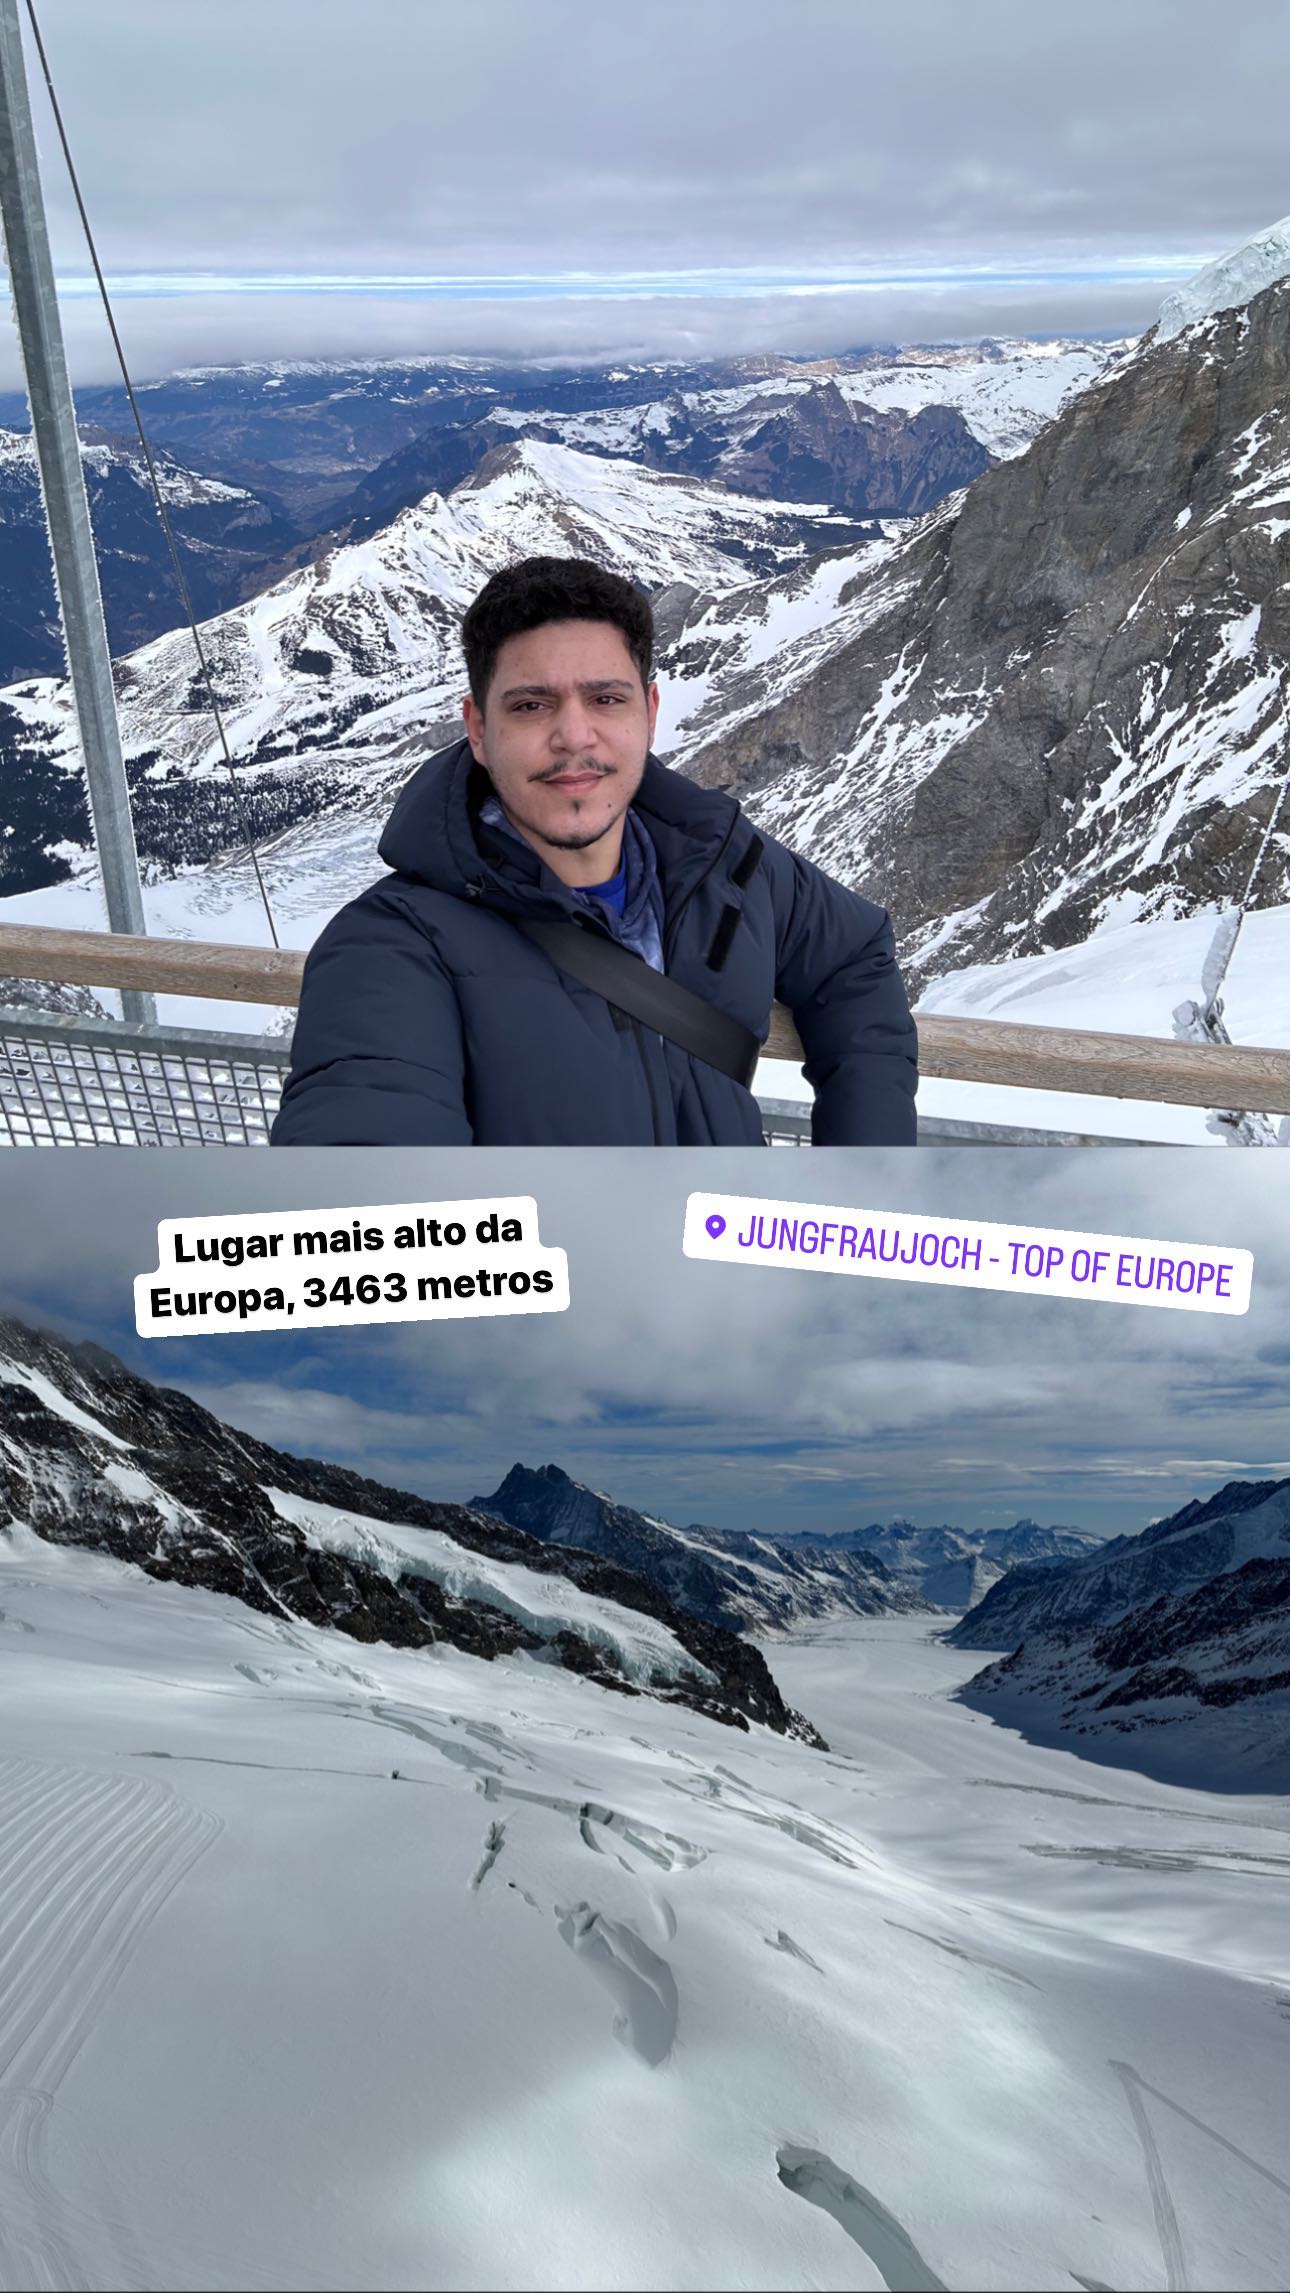 Highest place in Europe, 3463 meters